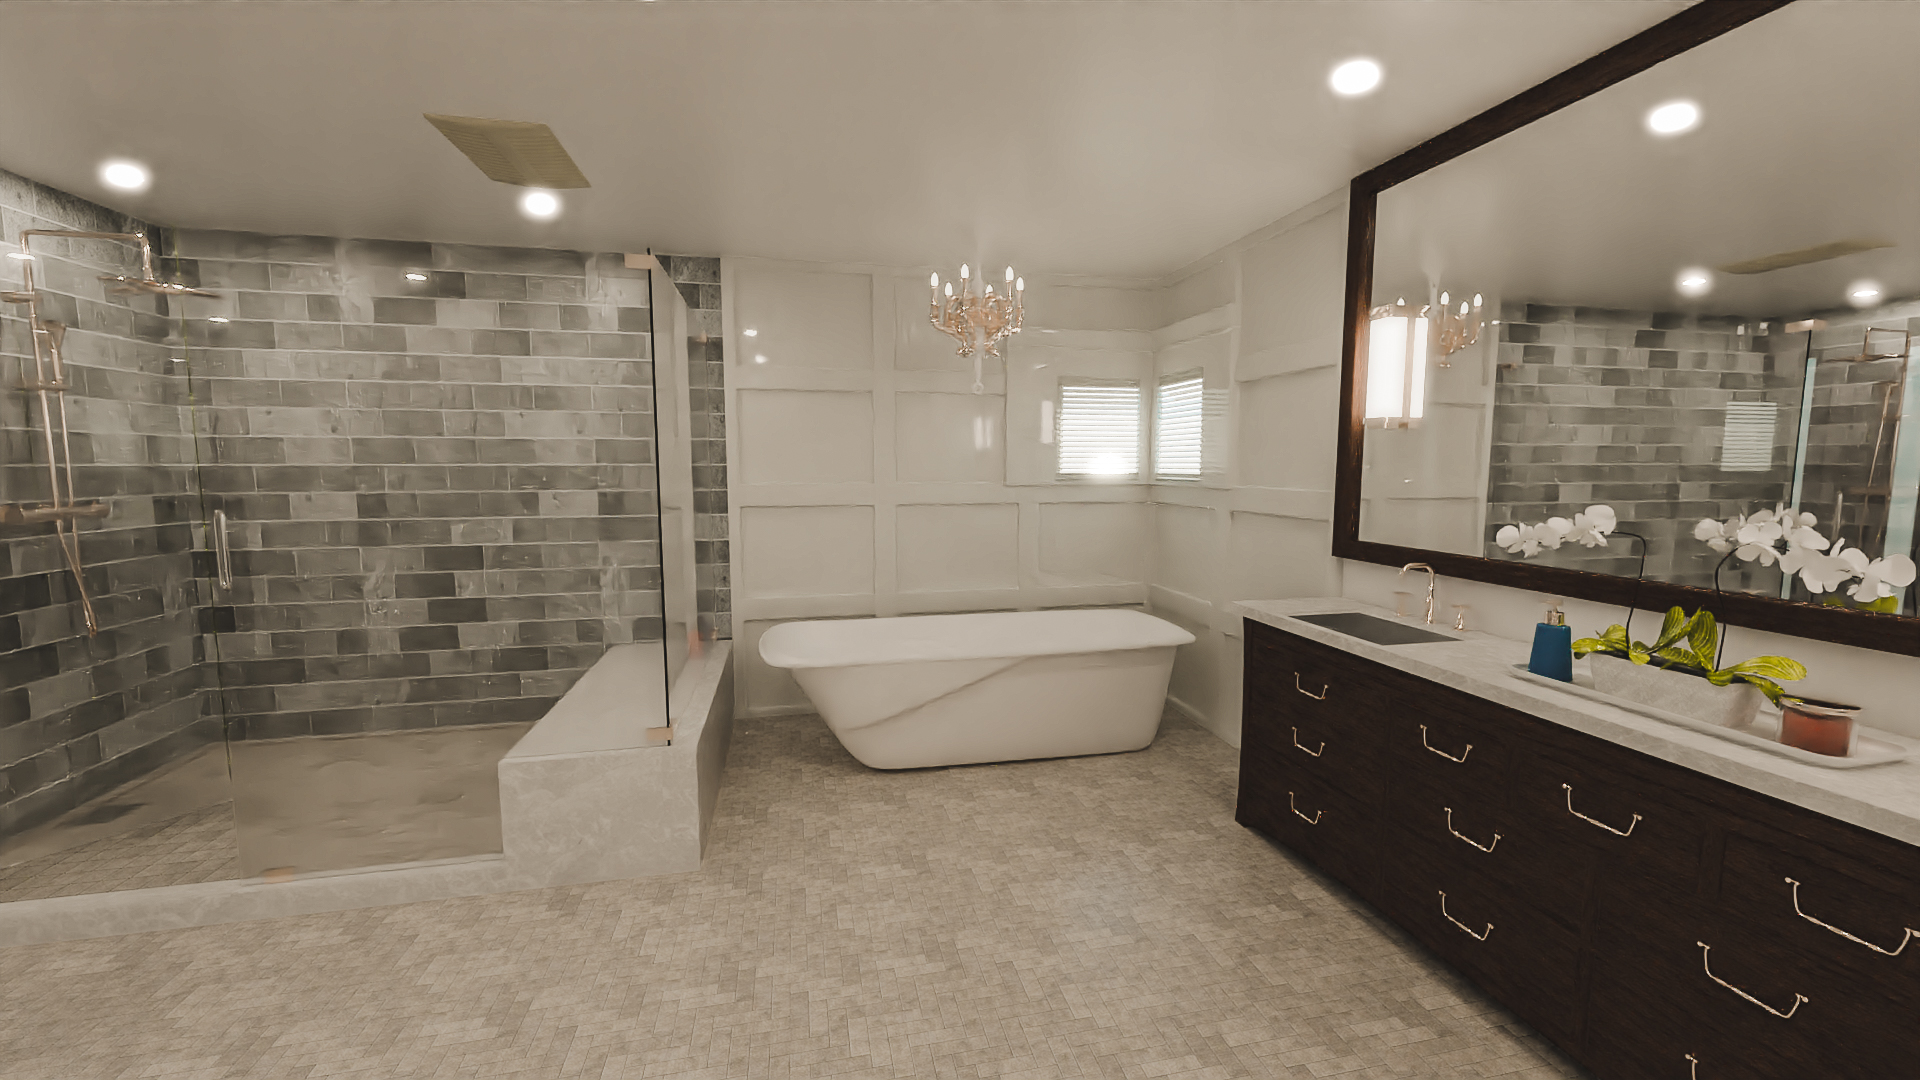 TS Classic Bathroom 01 by: Tesla3dCorp, 3D Models by Daz 3D